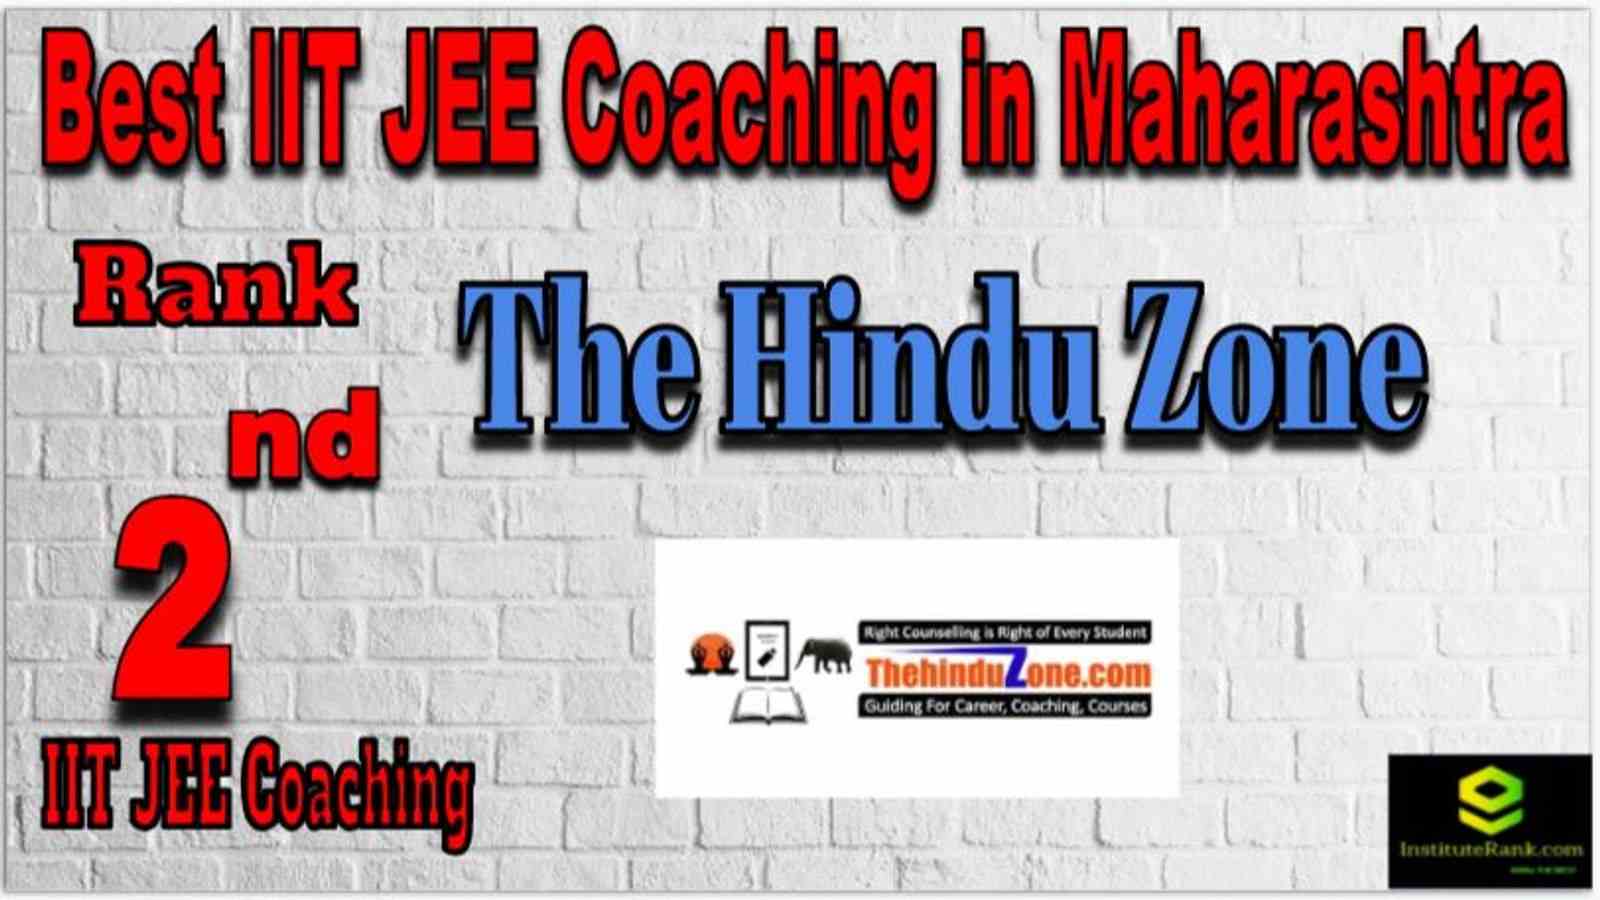 Rank 2 Best IIT JEE Coaching in Maharashtra